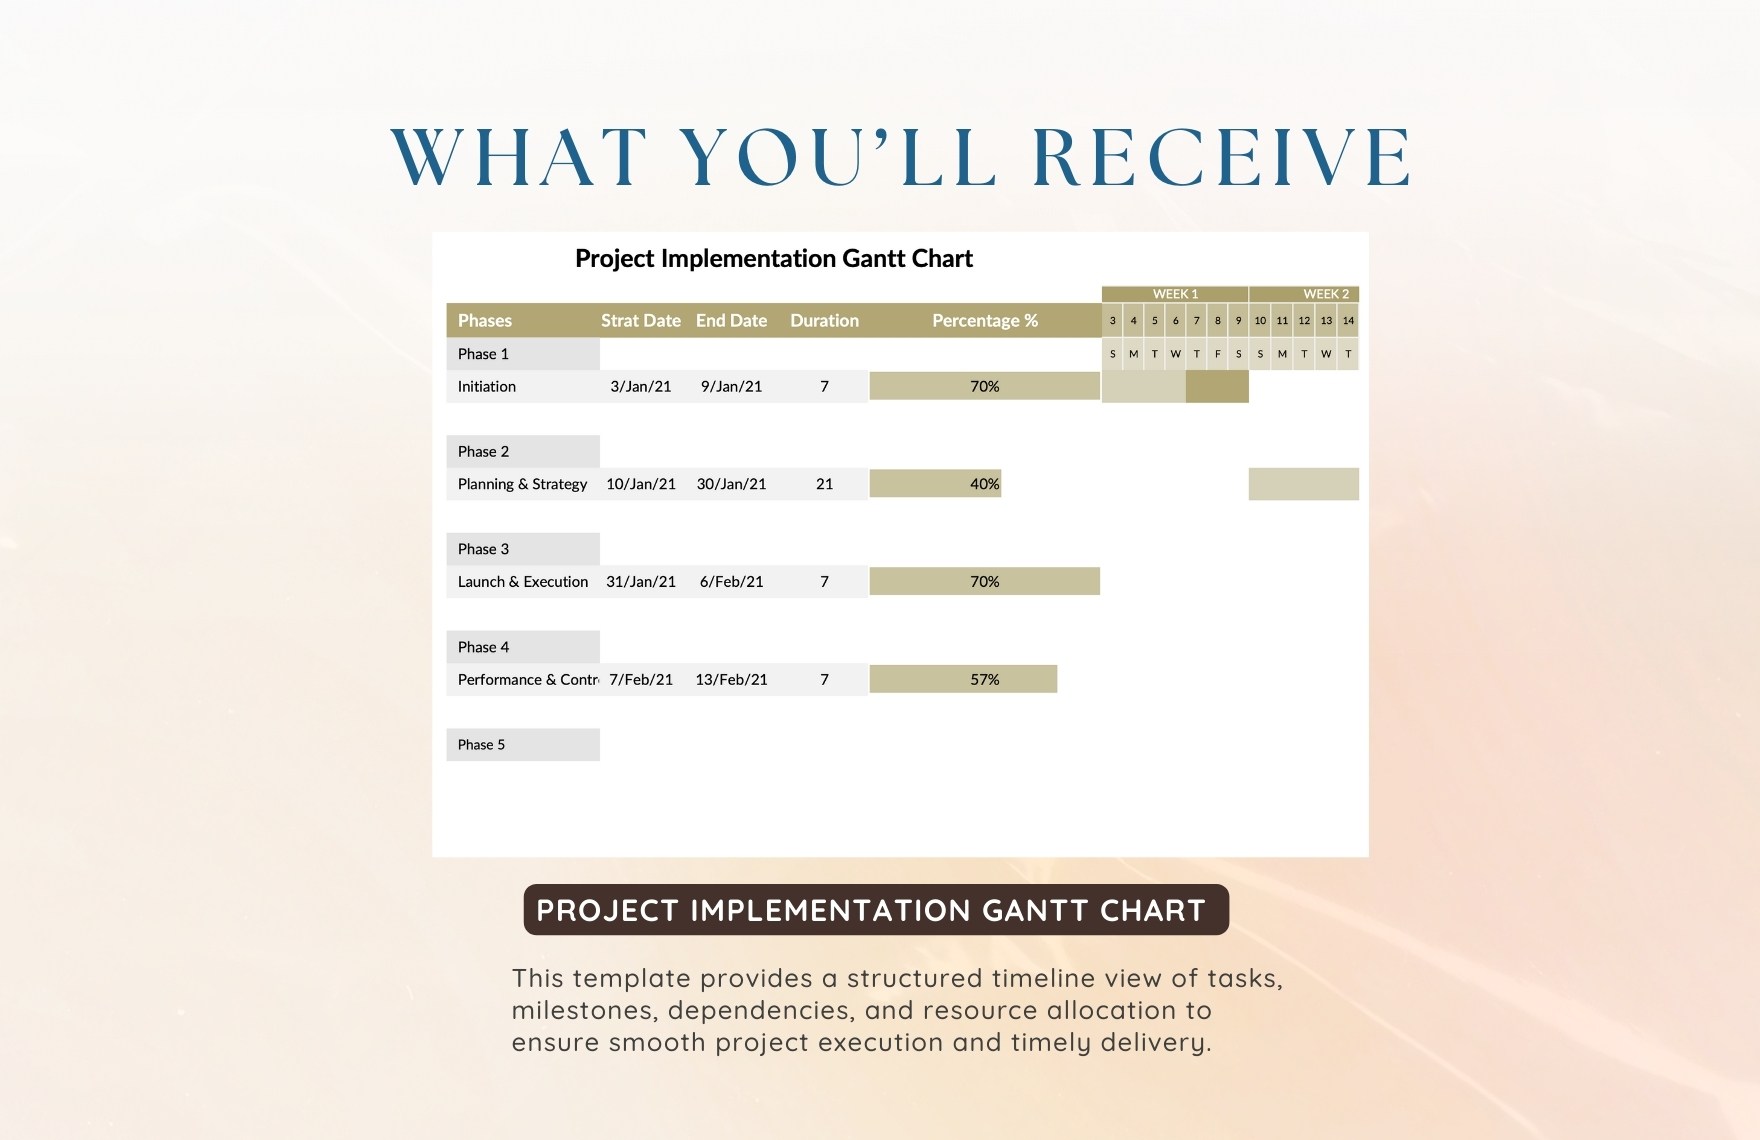 Project Implementation Gantt Chart Template